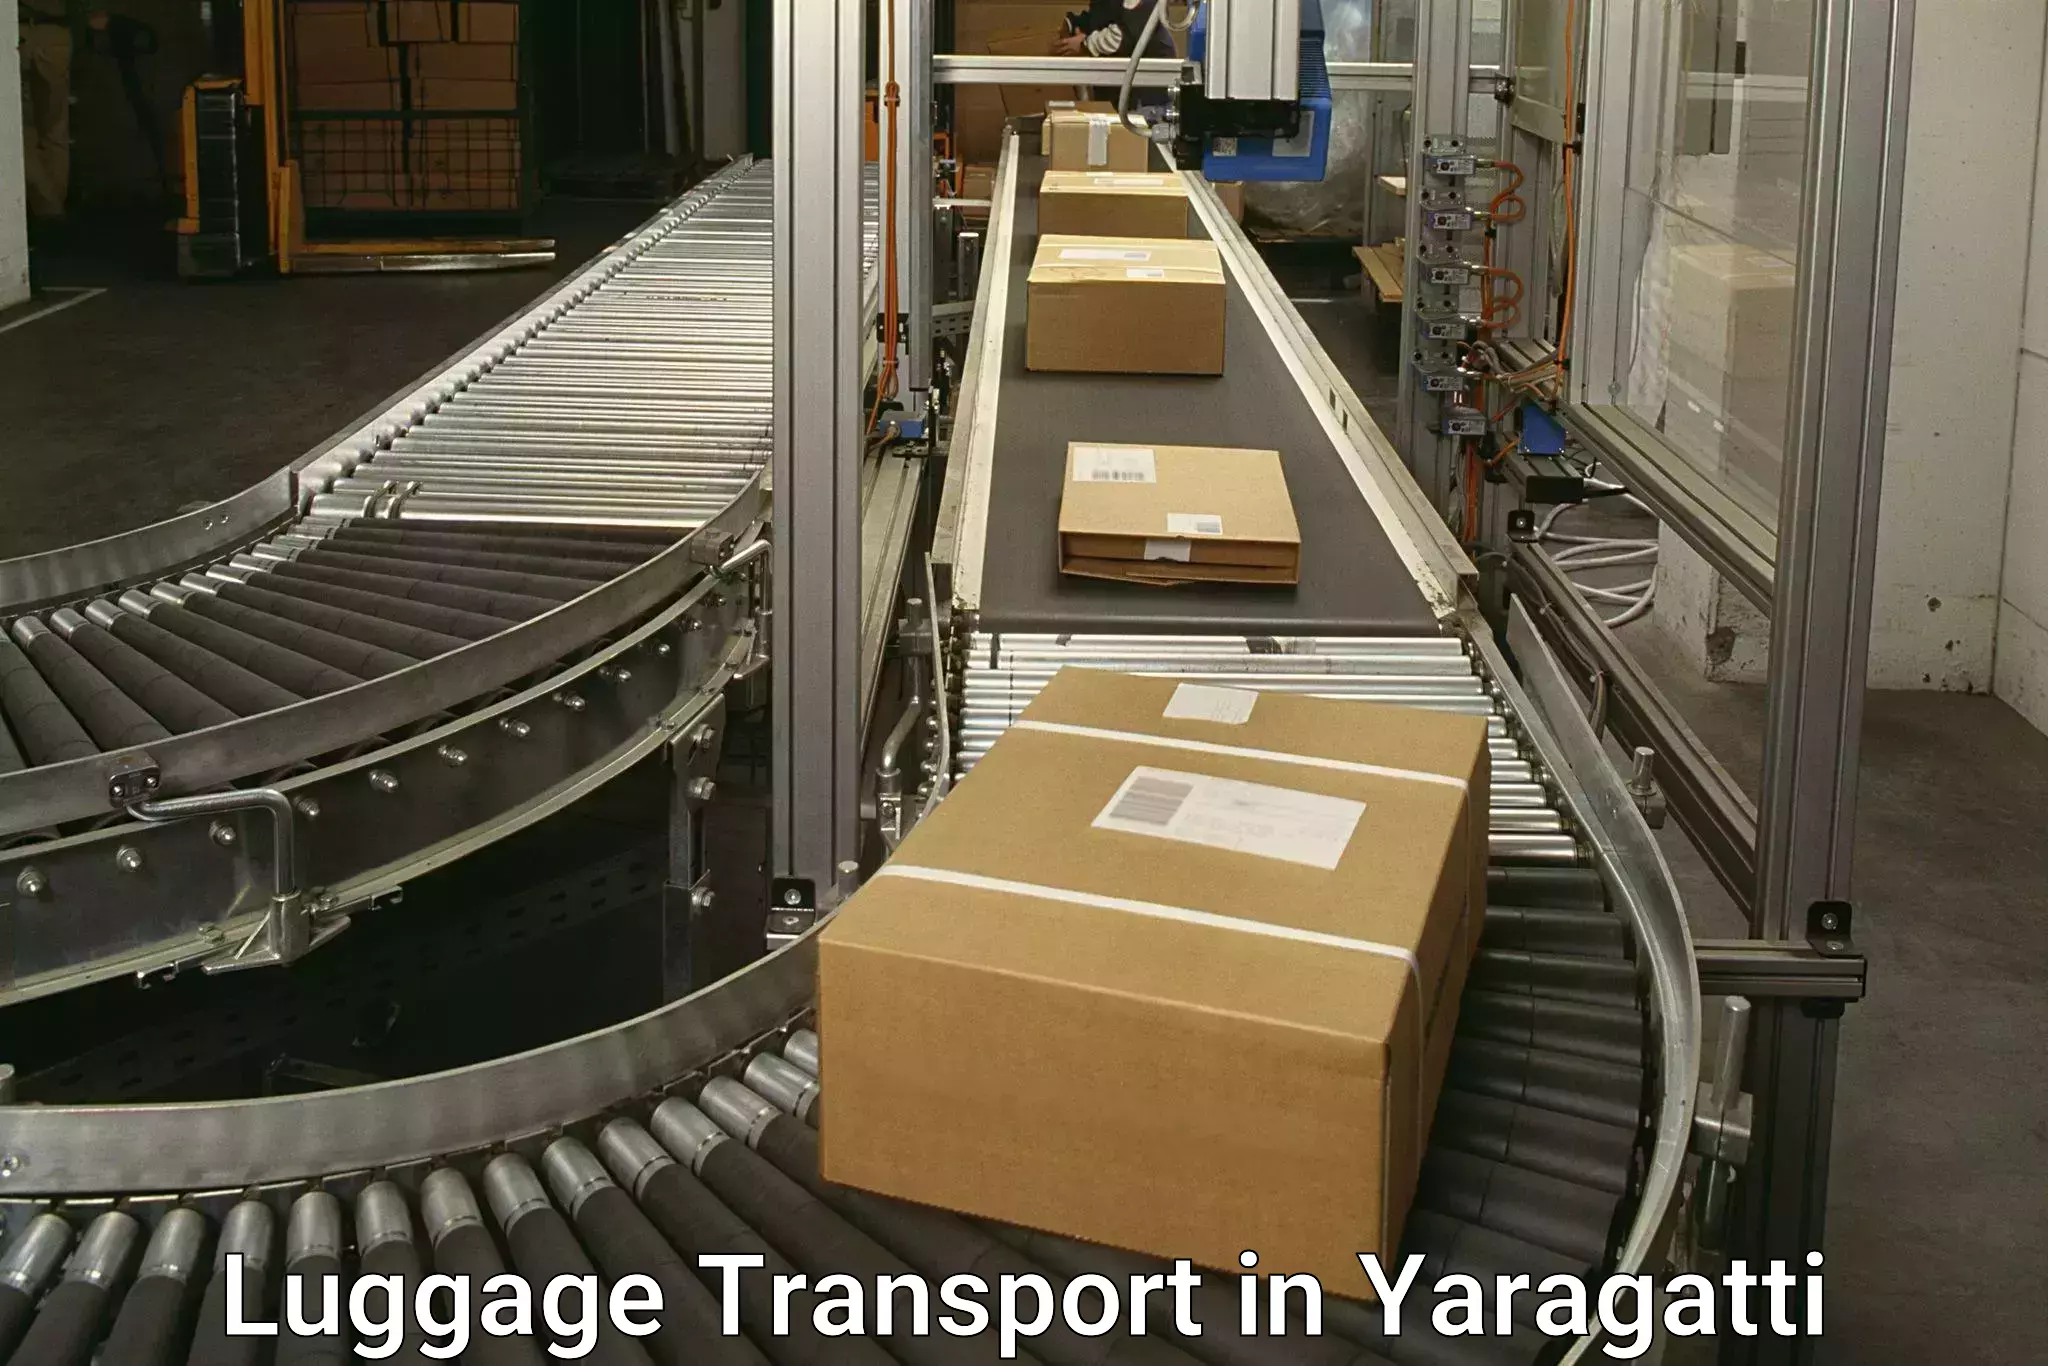 Luggage transport rates in Yaragatti